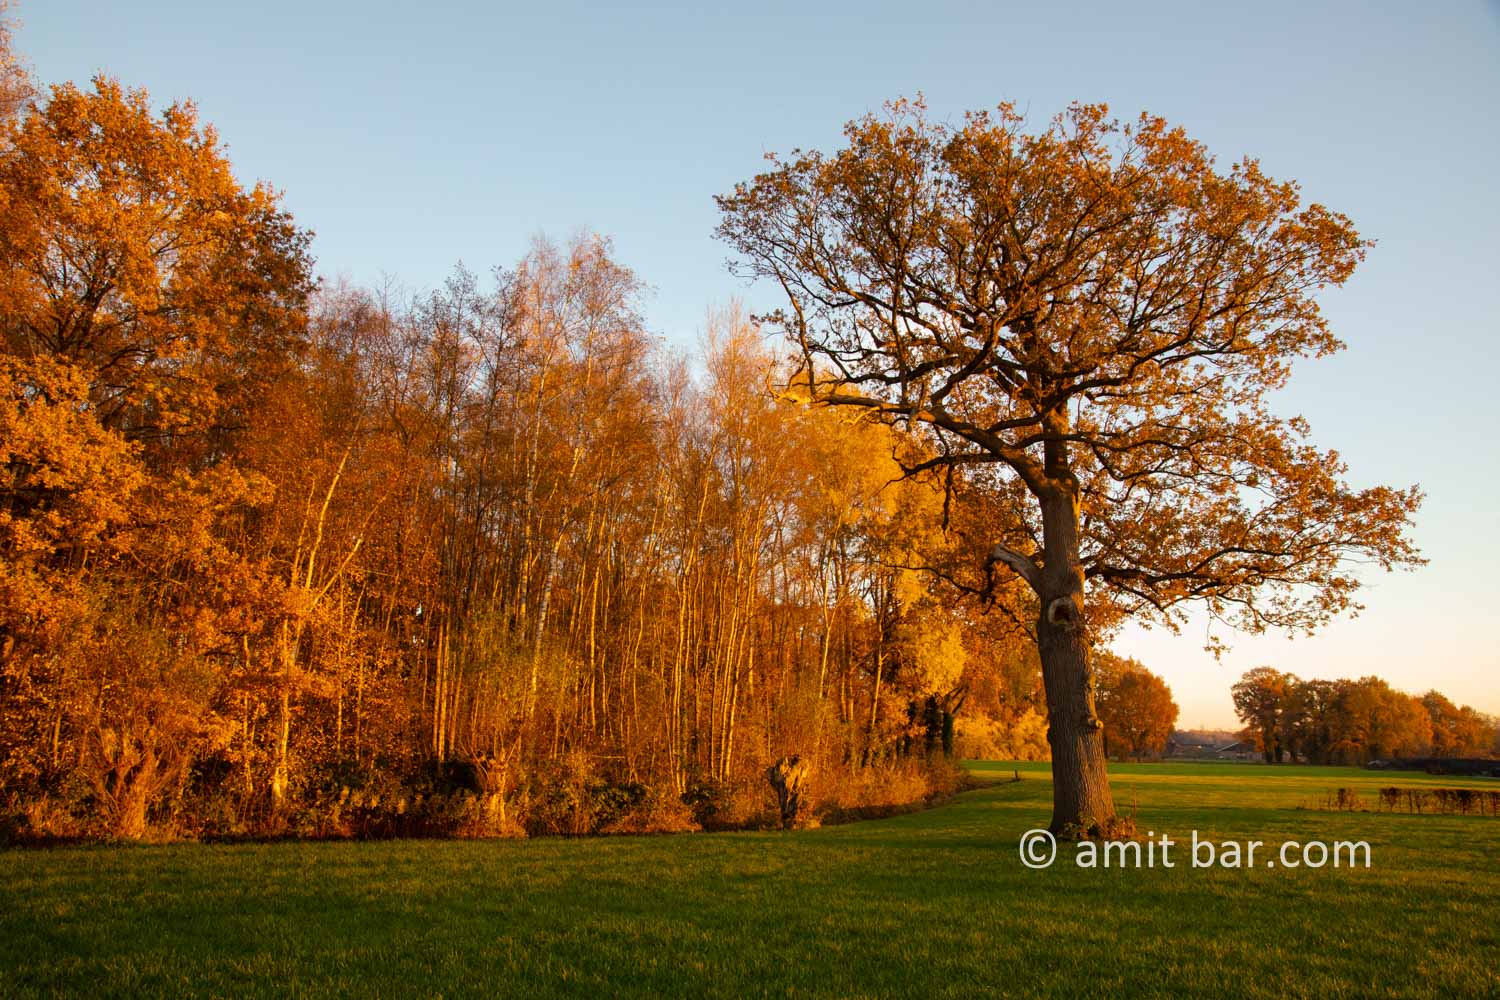 Autumn colors V: Autumn colors in the Achterhoek region, The Netherlands